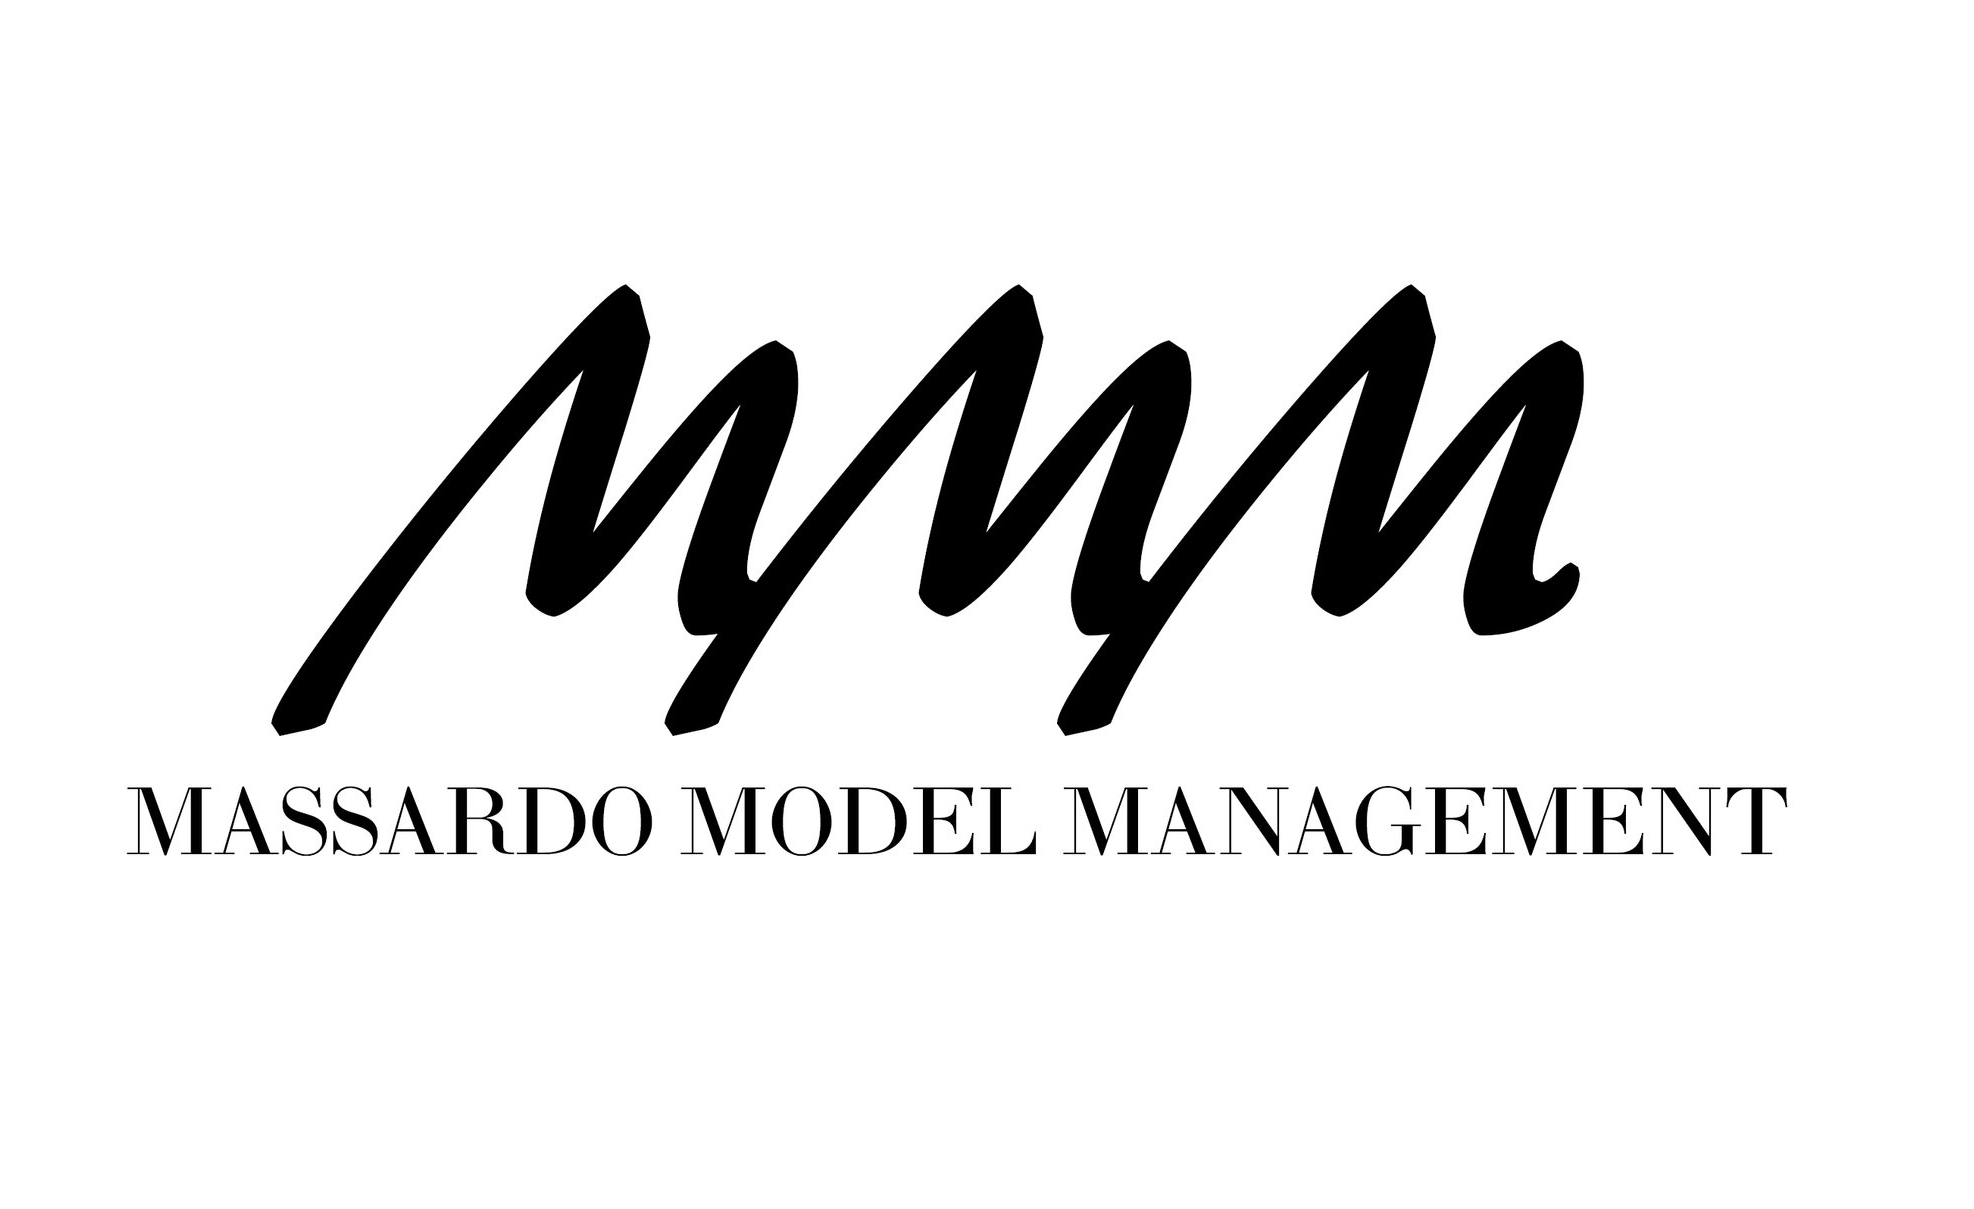 MASSARDO MODEL MANAGEMENT